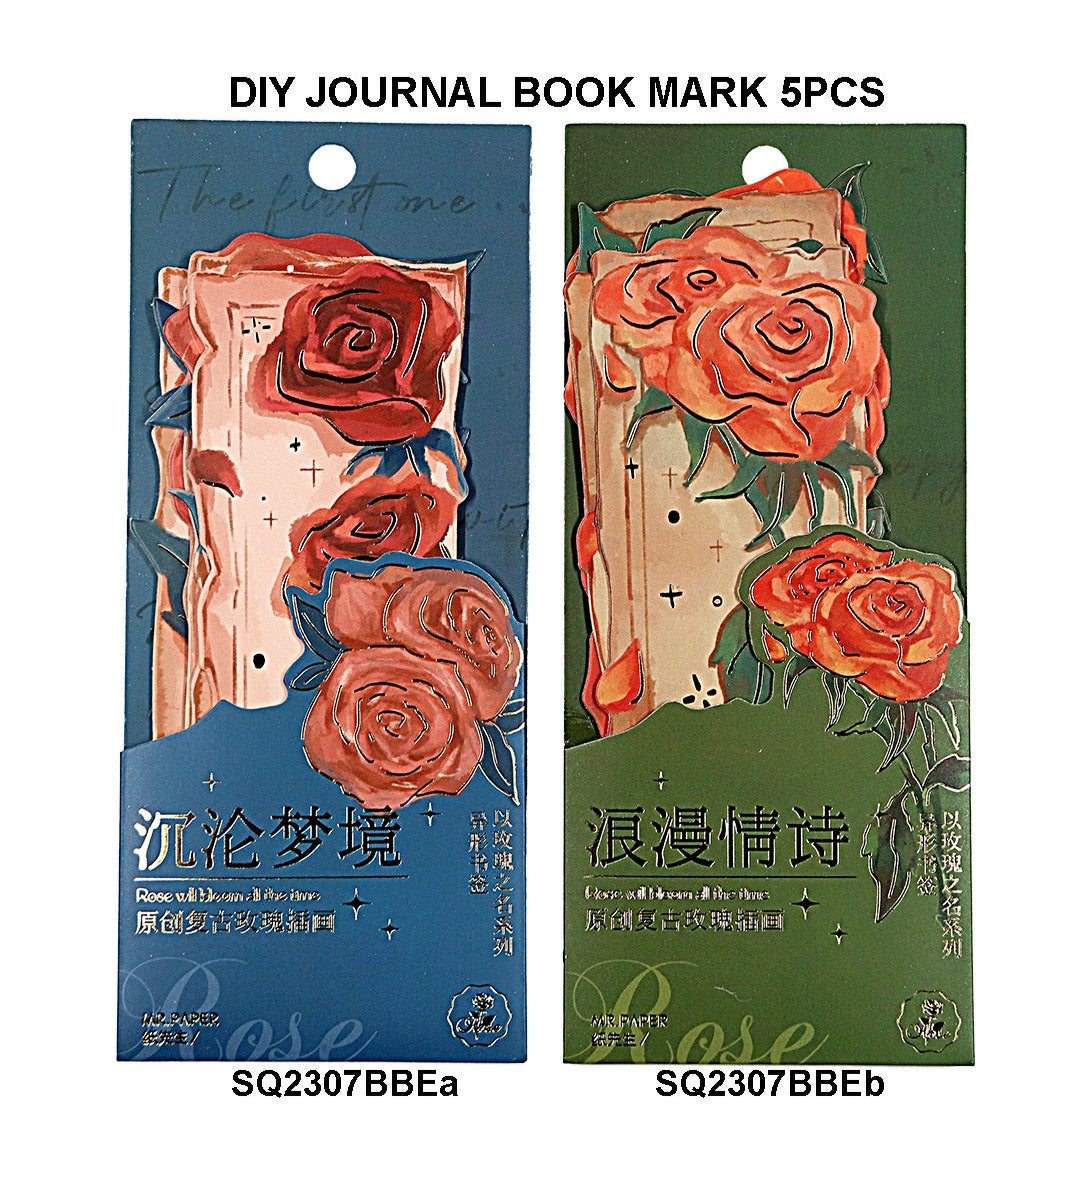 Diy Journal Book Mark 5Pcs 36 Sq2307Bbe | INKARTO